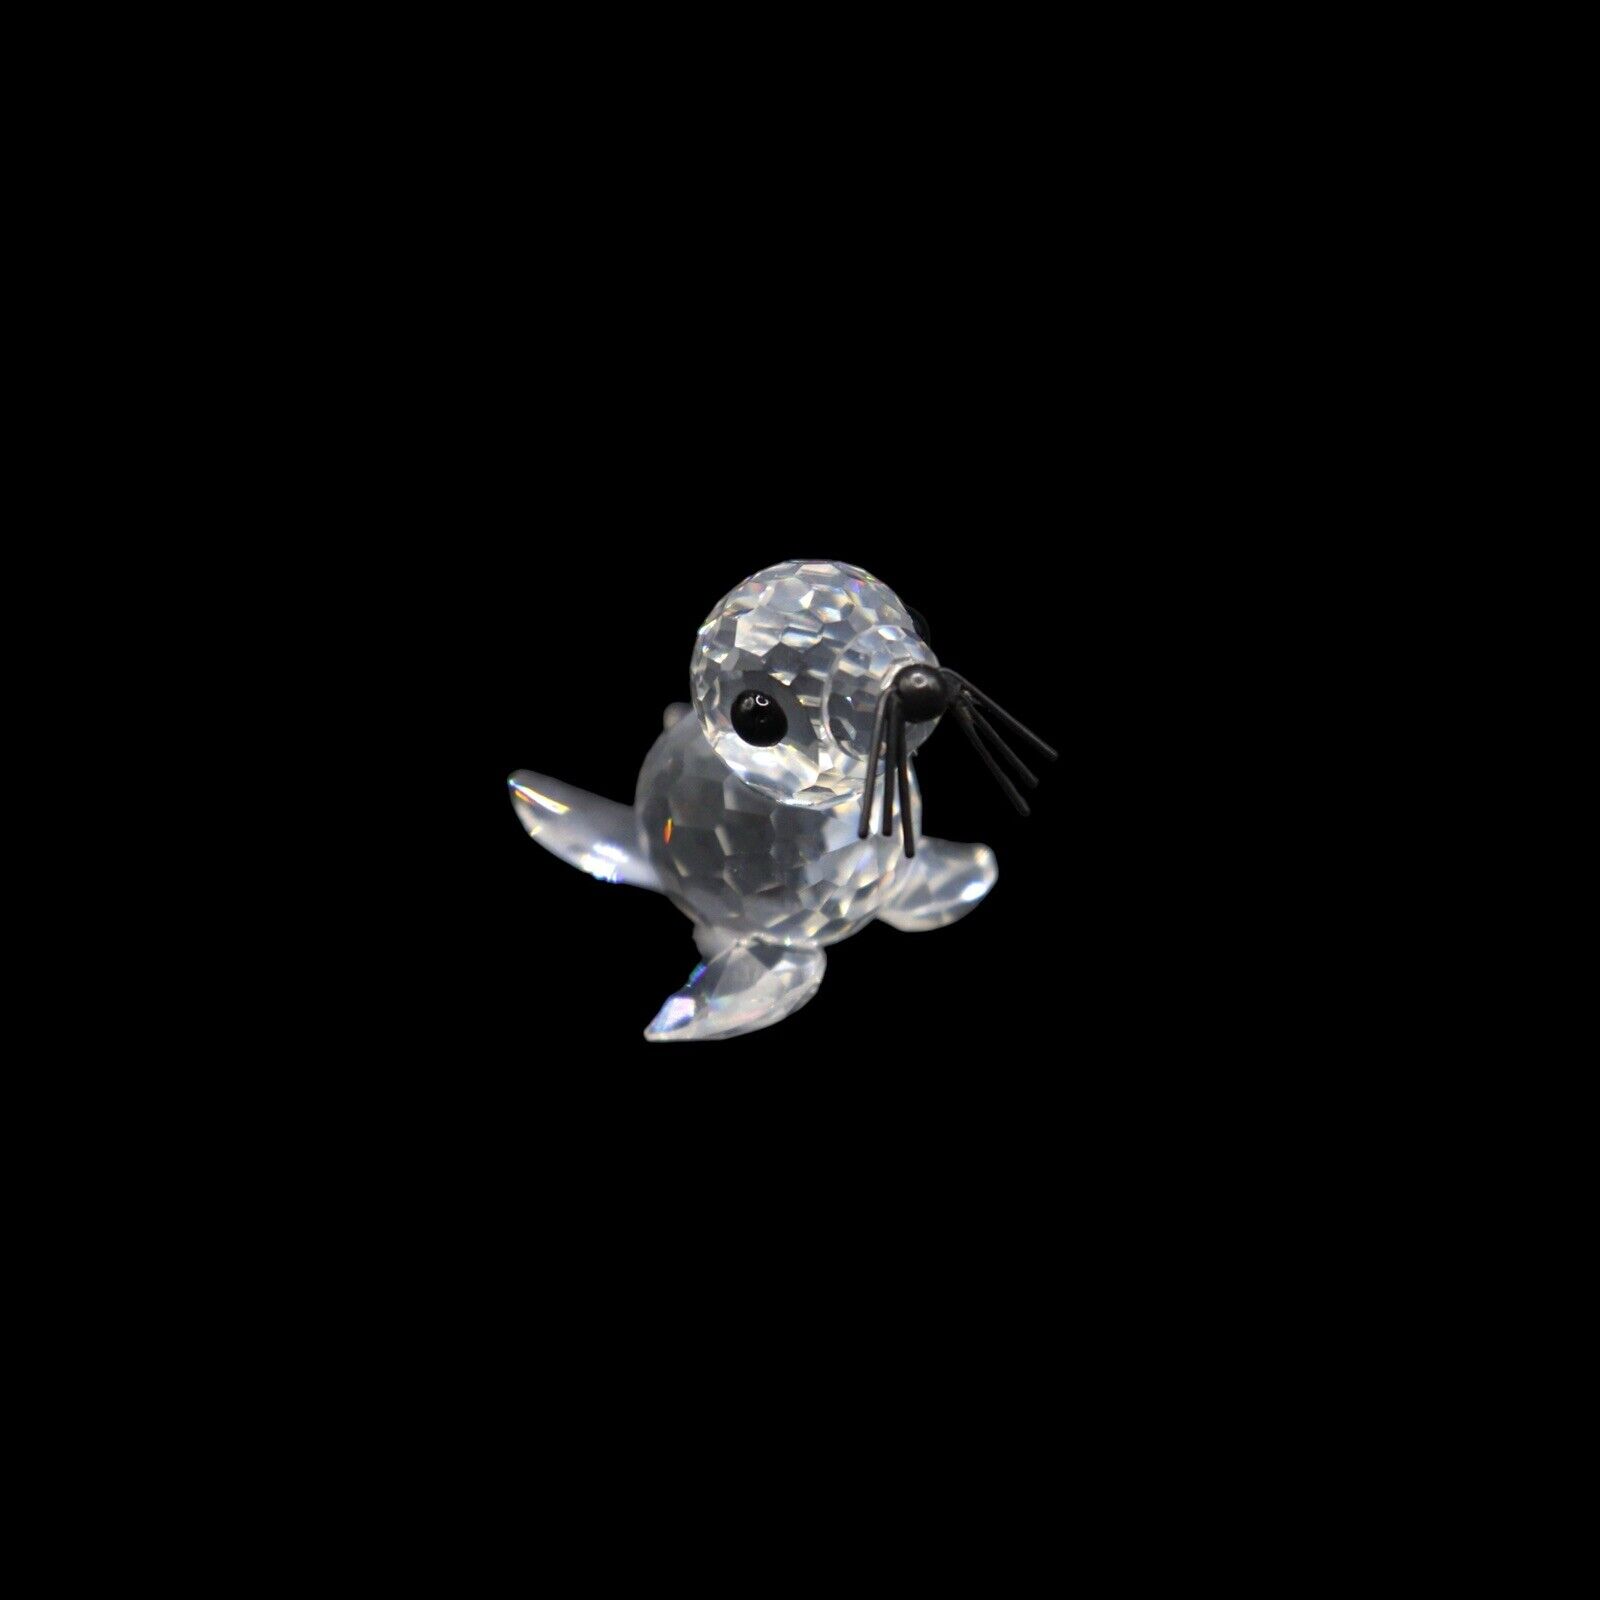 Swarovski Crystal “Kingdom of Ice and Snow” Collection - Mini Seal Figurine 